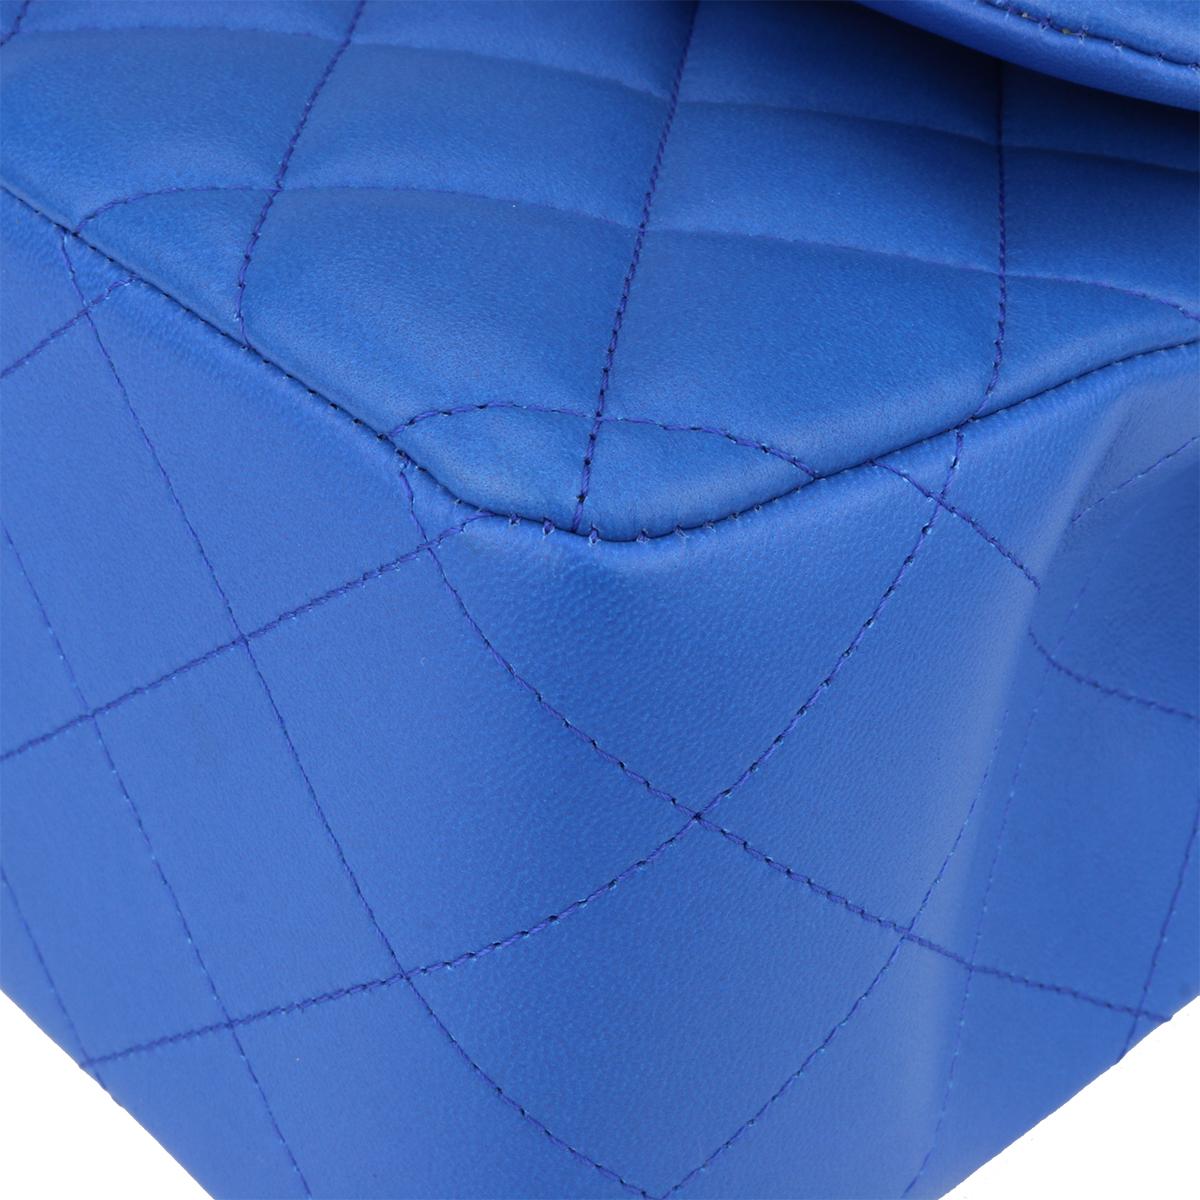 CHANEL Double Flap Jumbo Bag Blue Lambskin with Light Gold Hardware 2016 2